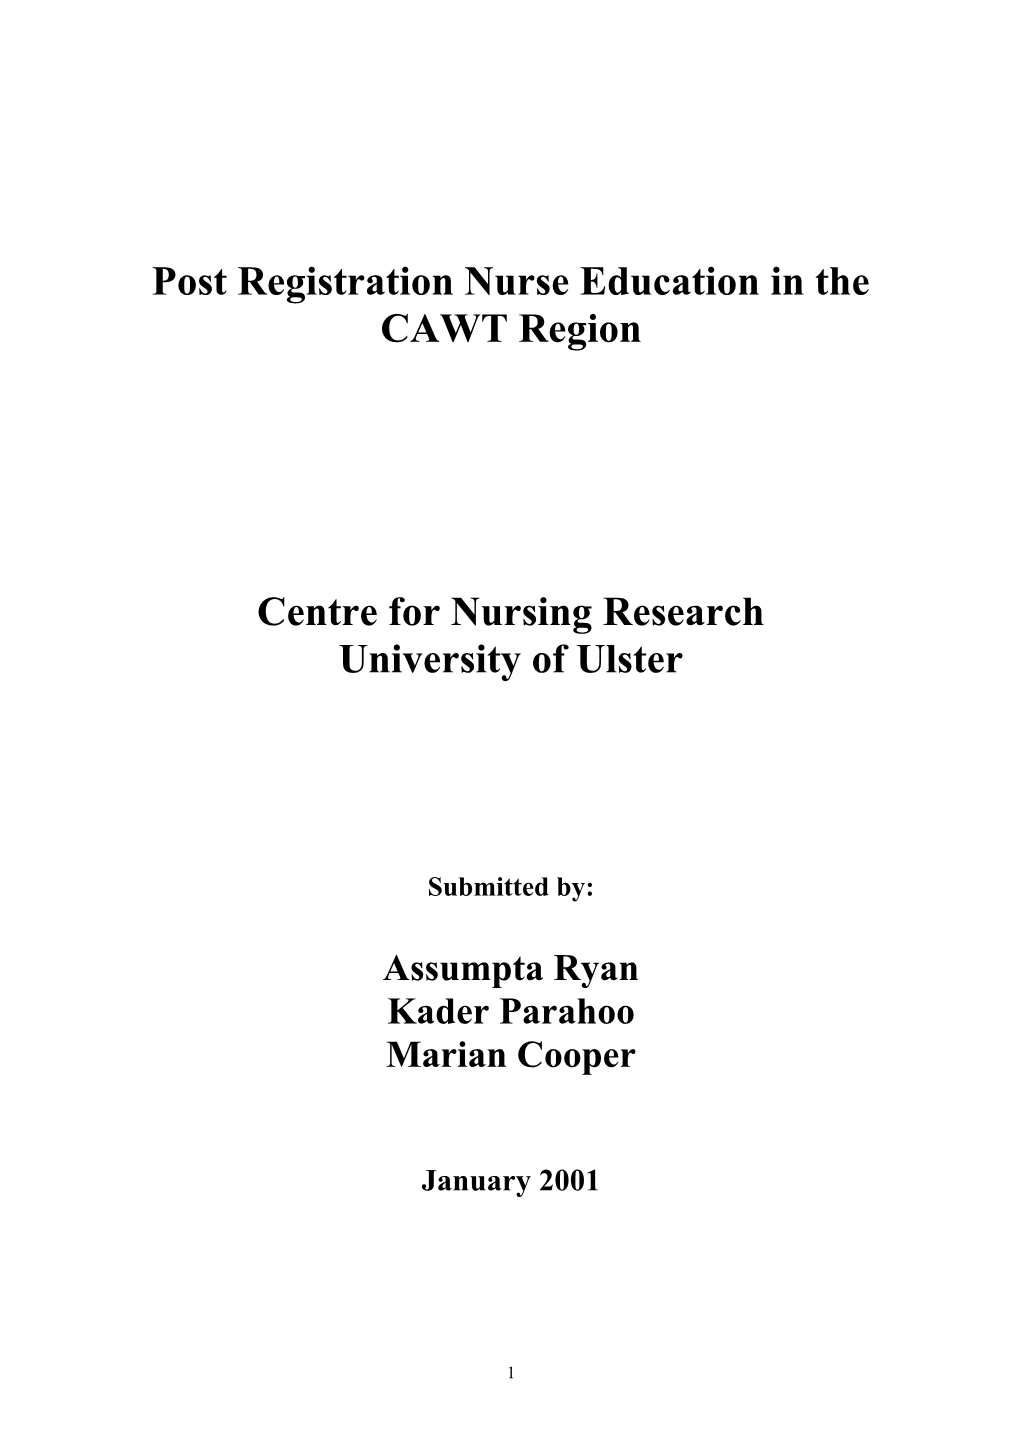 Post Registration Nurse Education in the CAWT Region